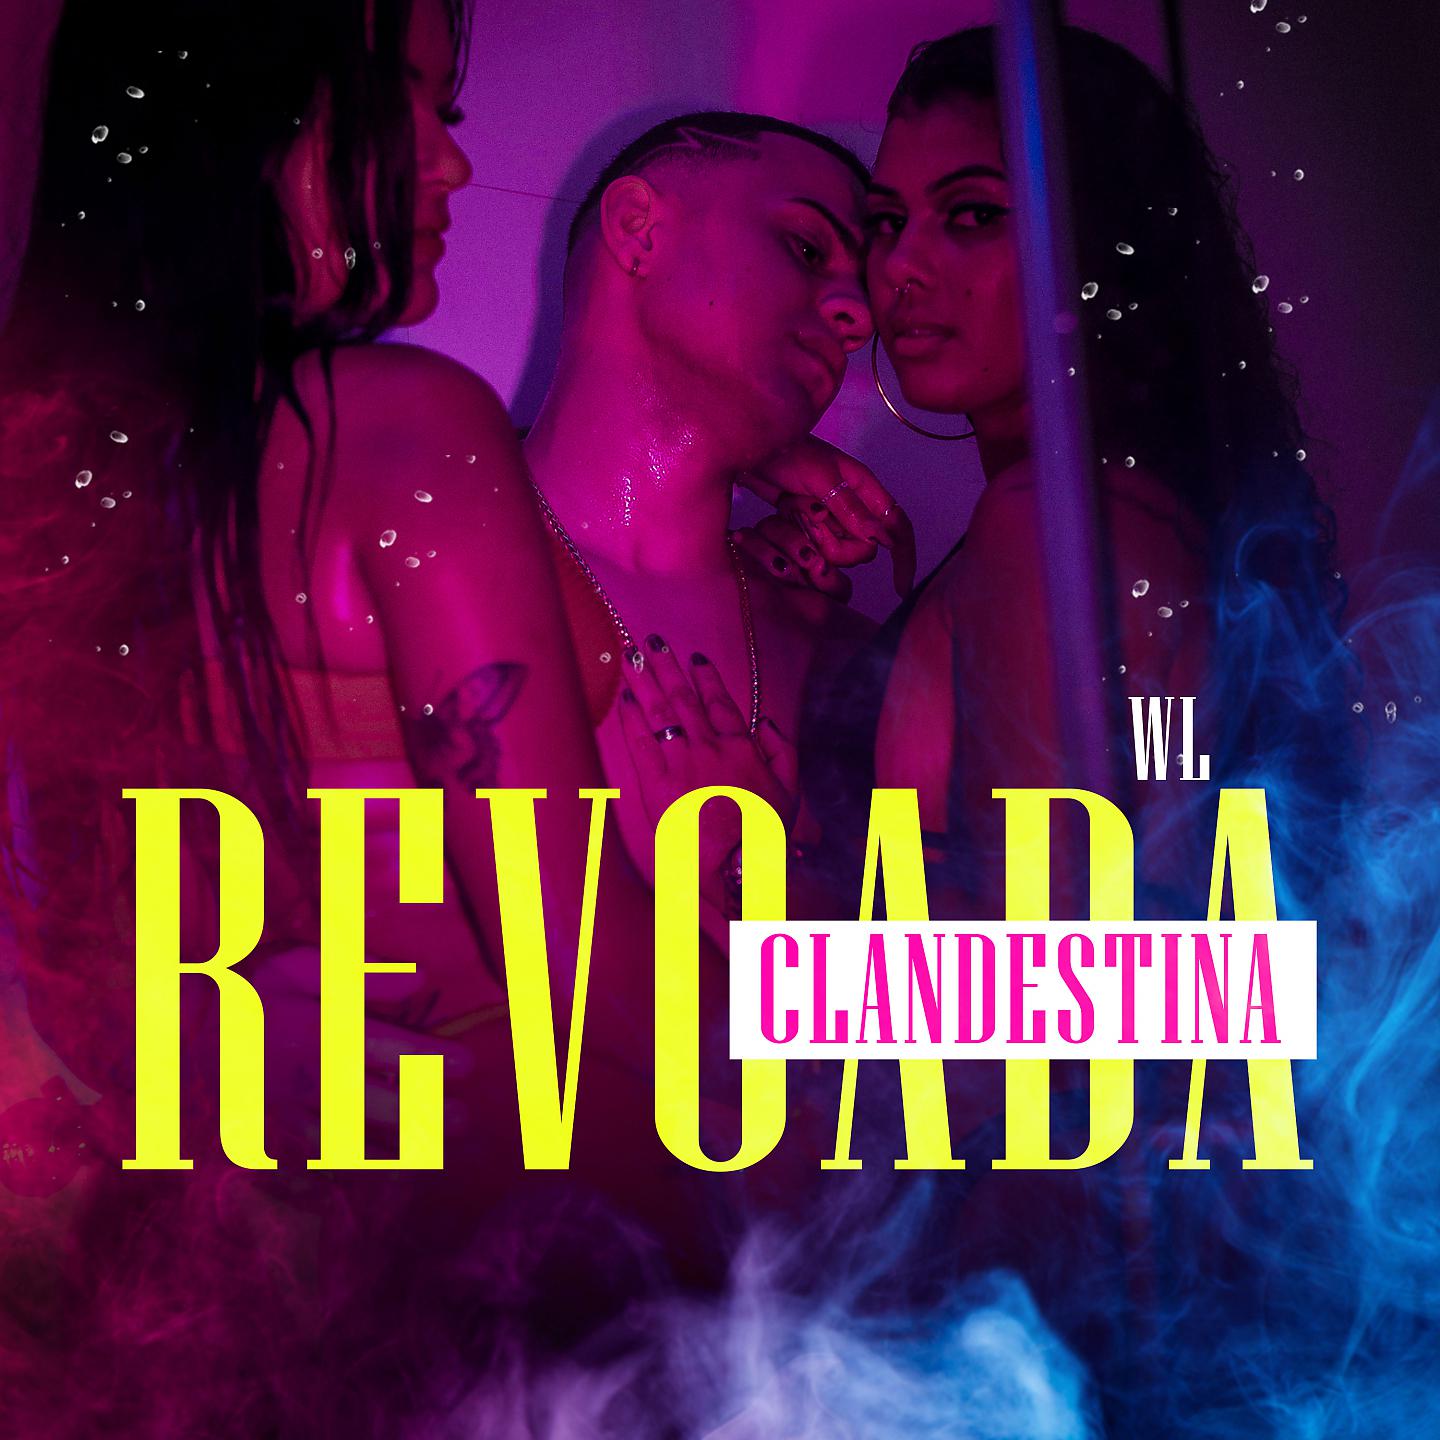 Постер альбома Revoada Clandestina